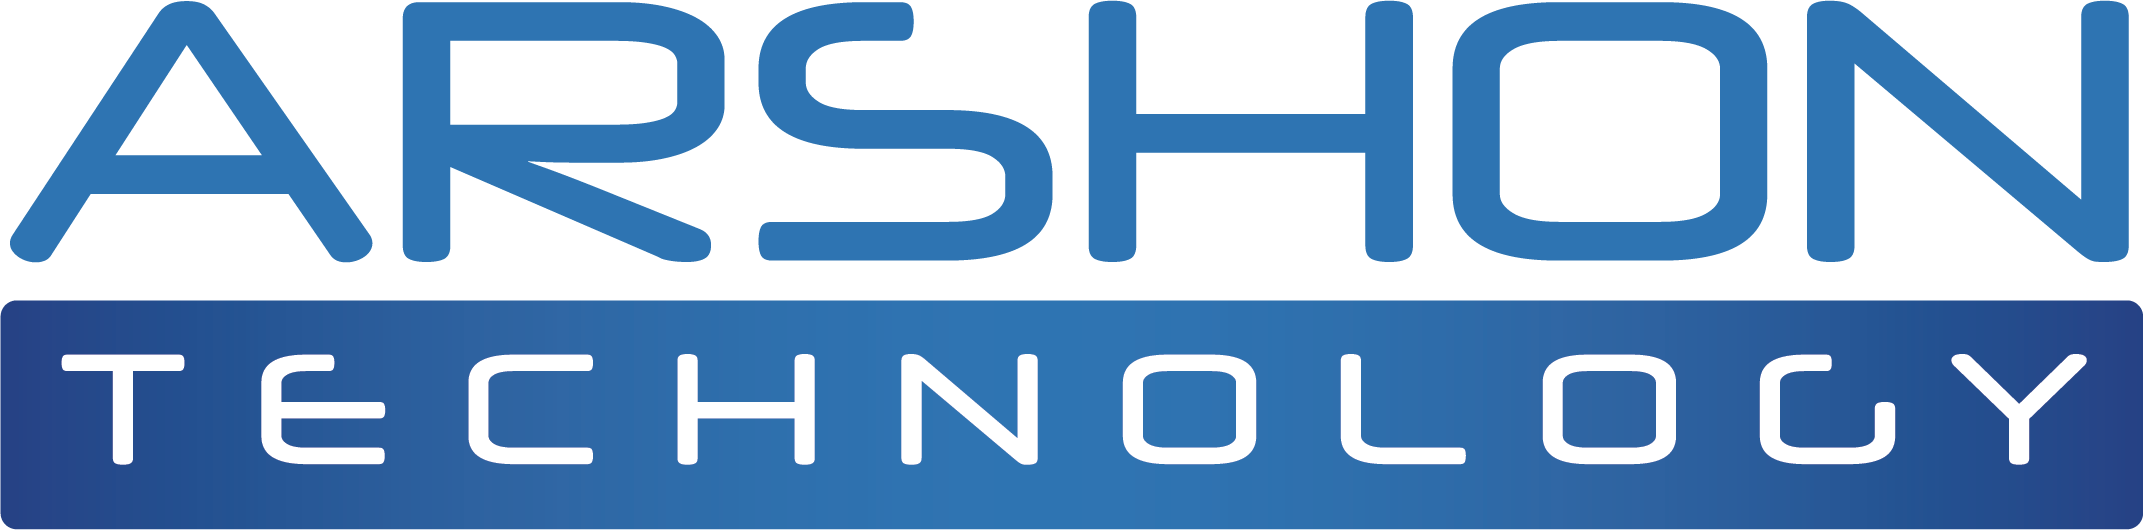 Arshon Technology Online Store